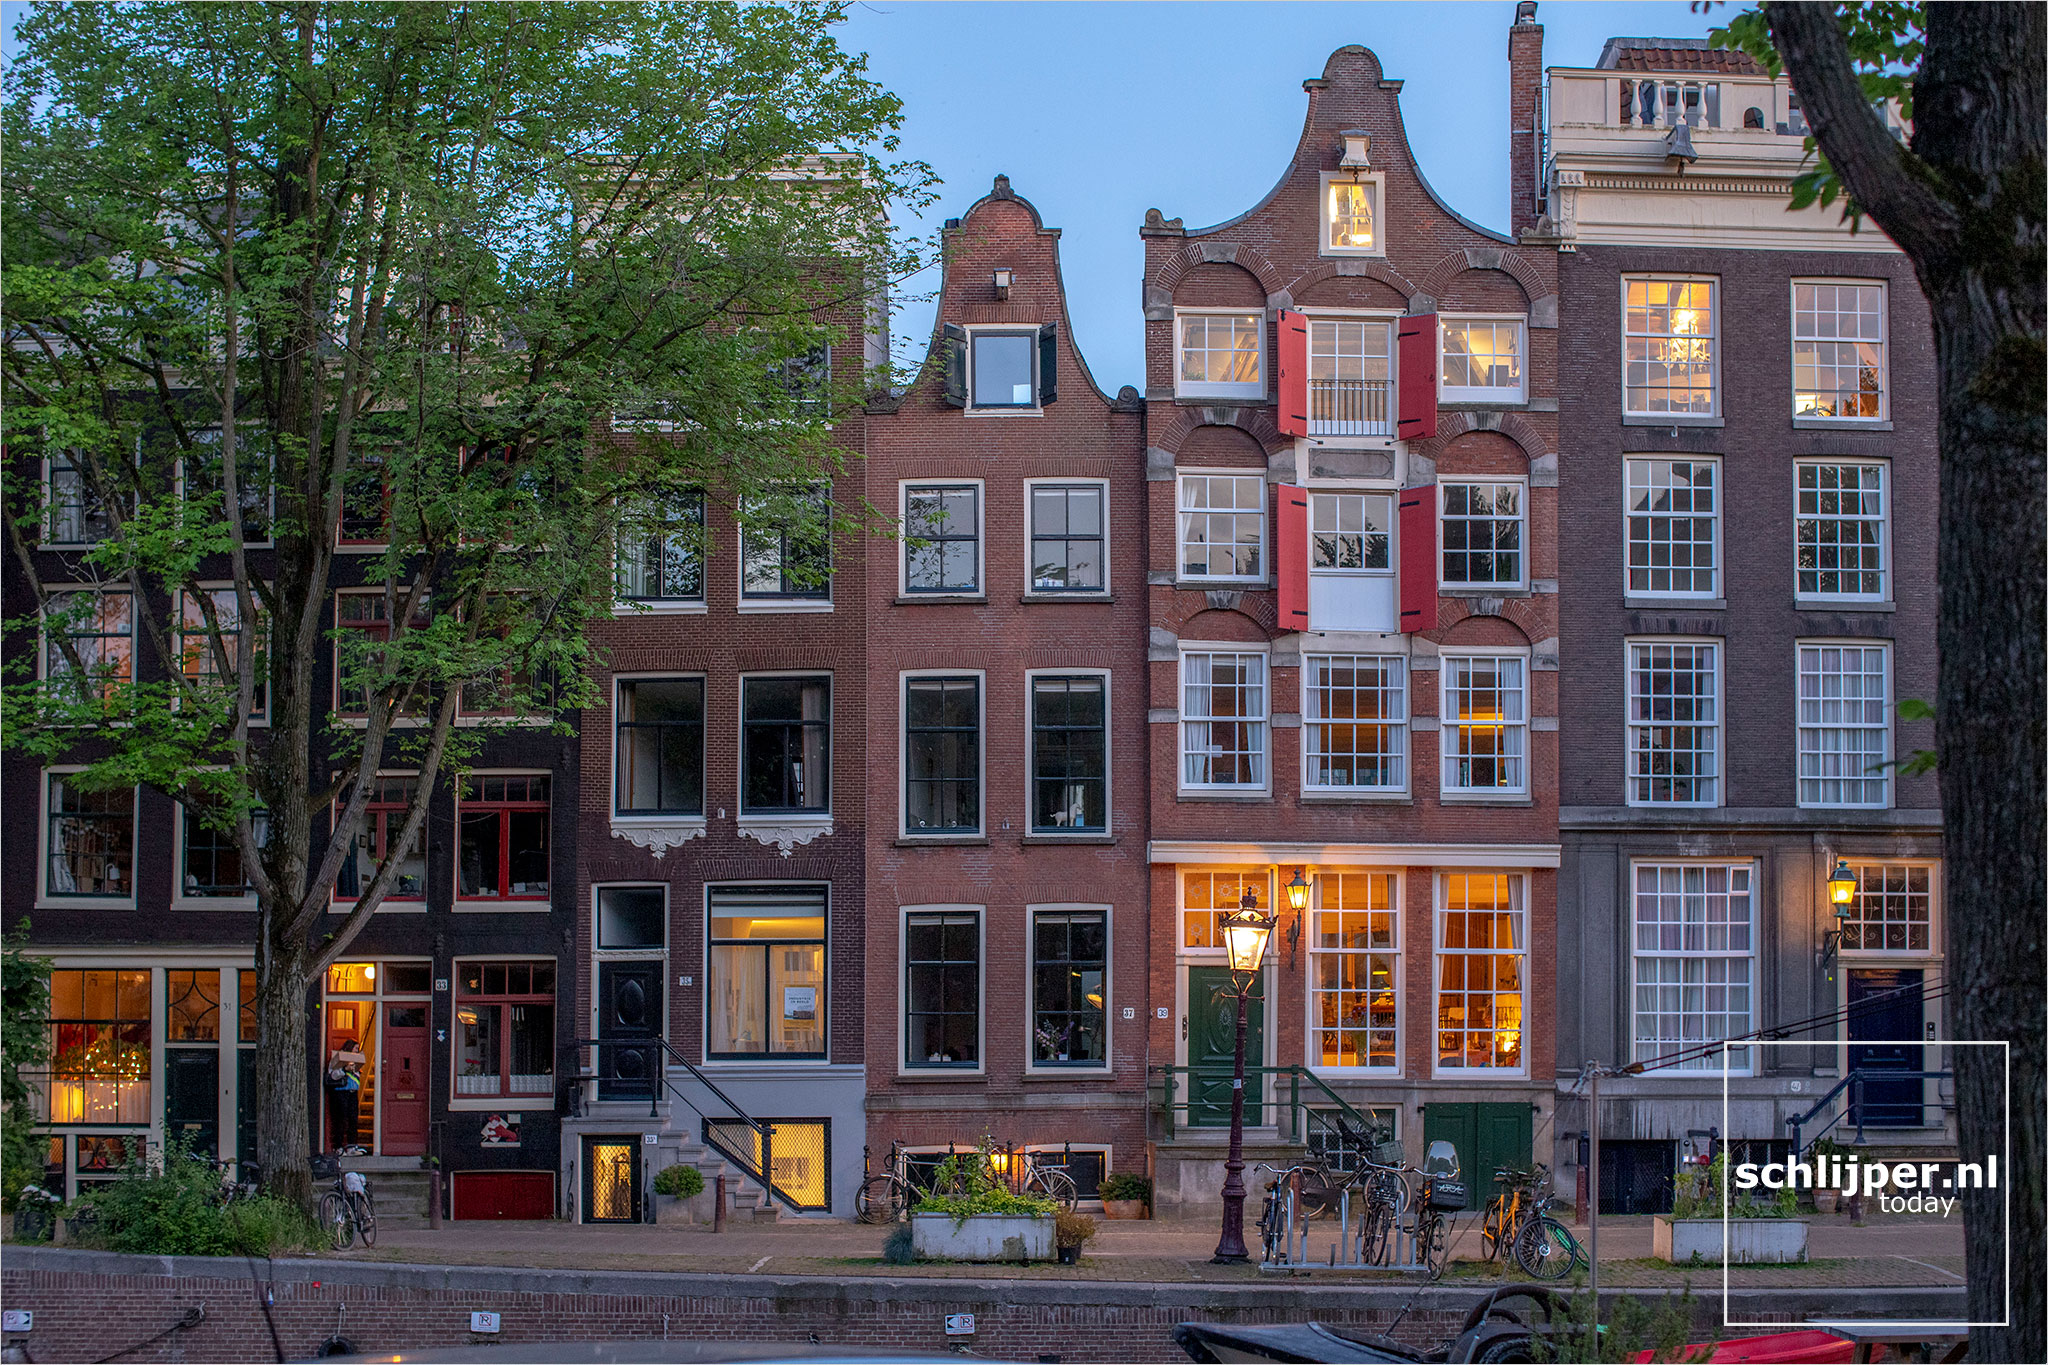 The Netherlands, Amsterdam, 23 juni 2021